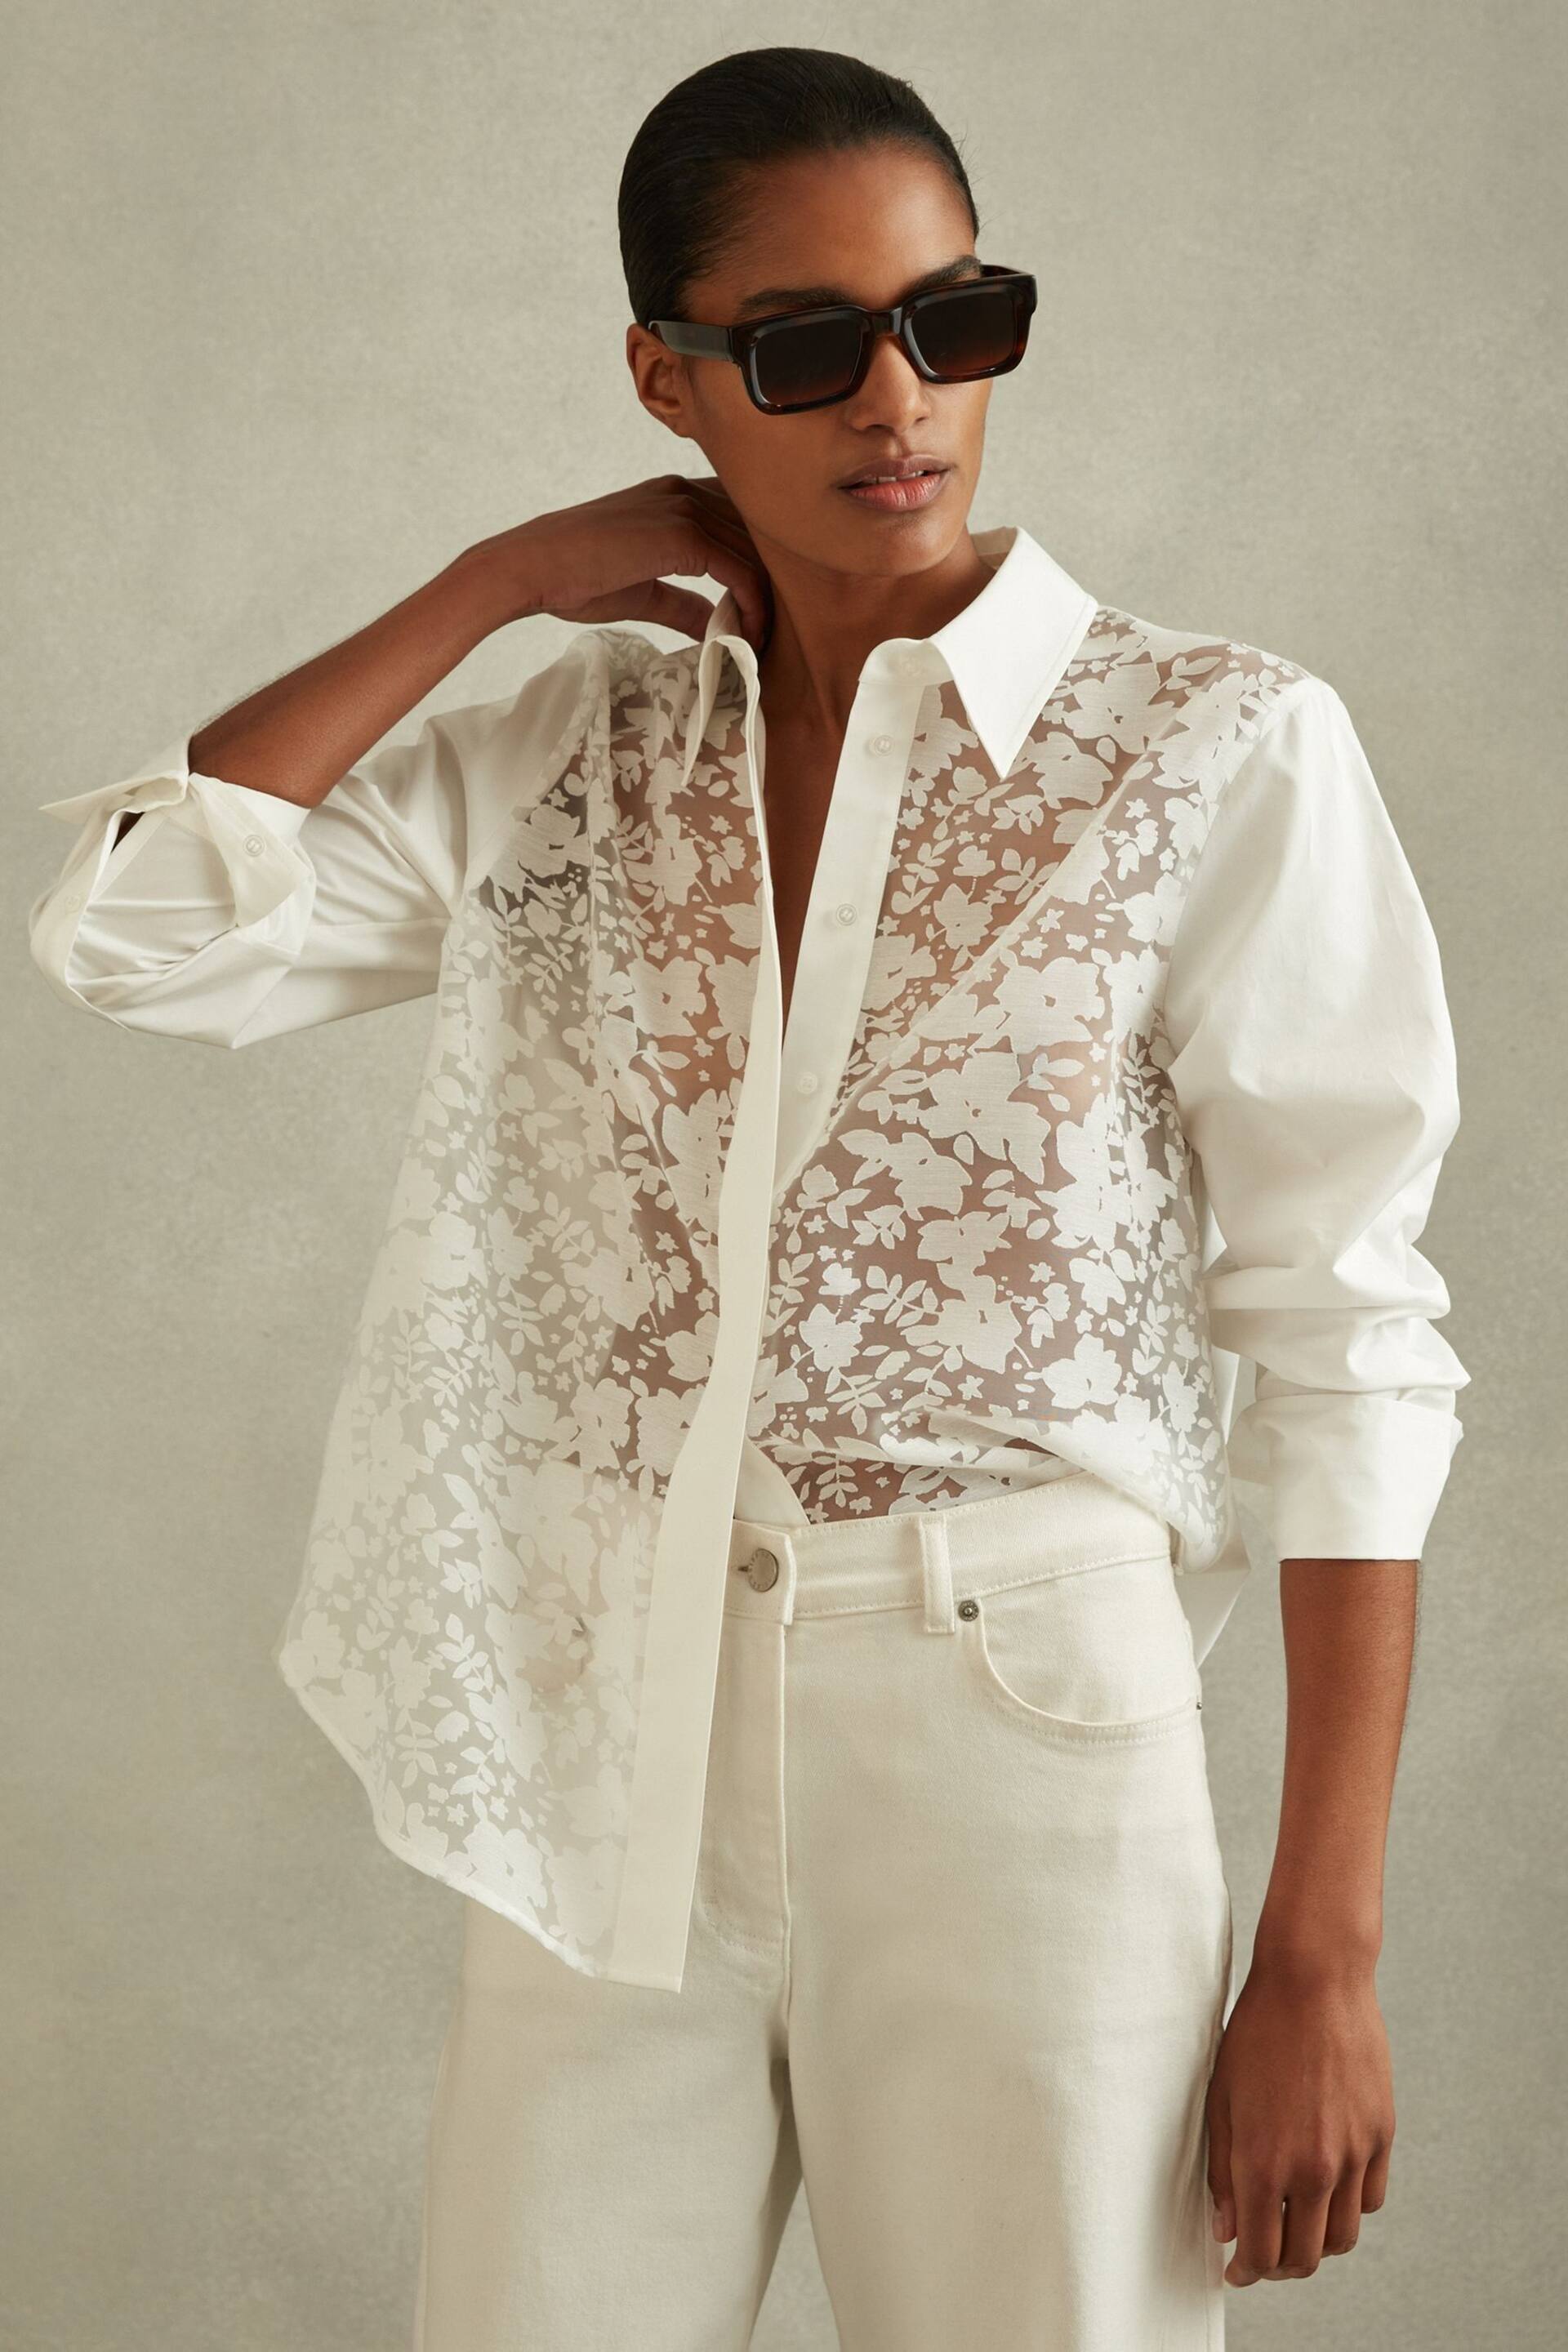 Reiss Ivory Delaney Cotton Burnout Floral Shirt - Image 1 of 5